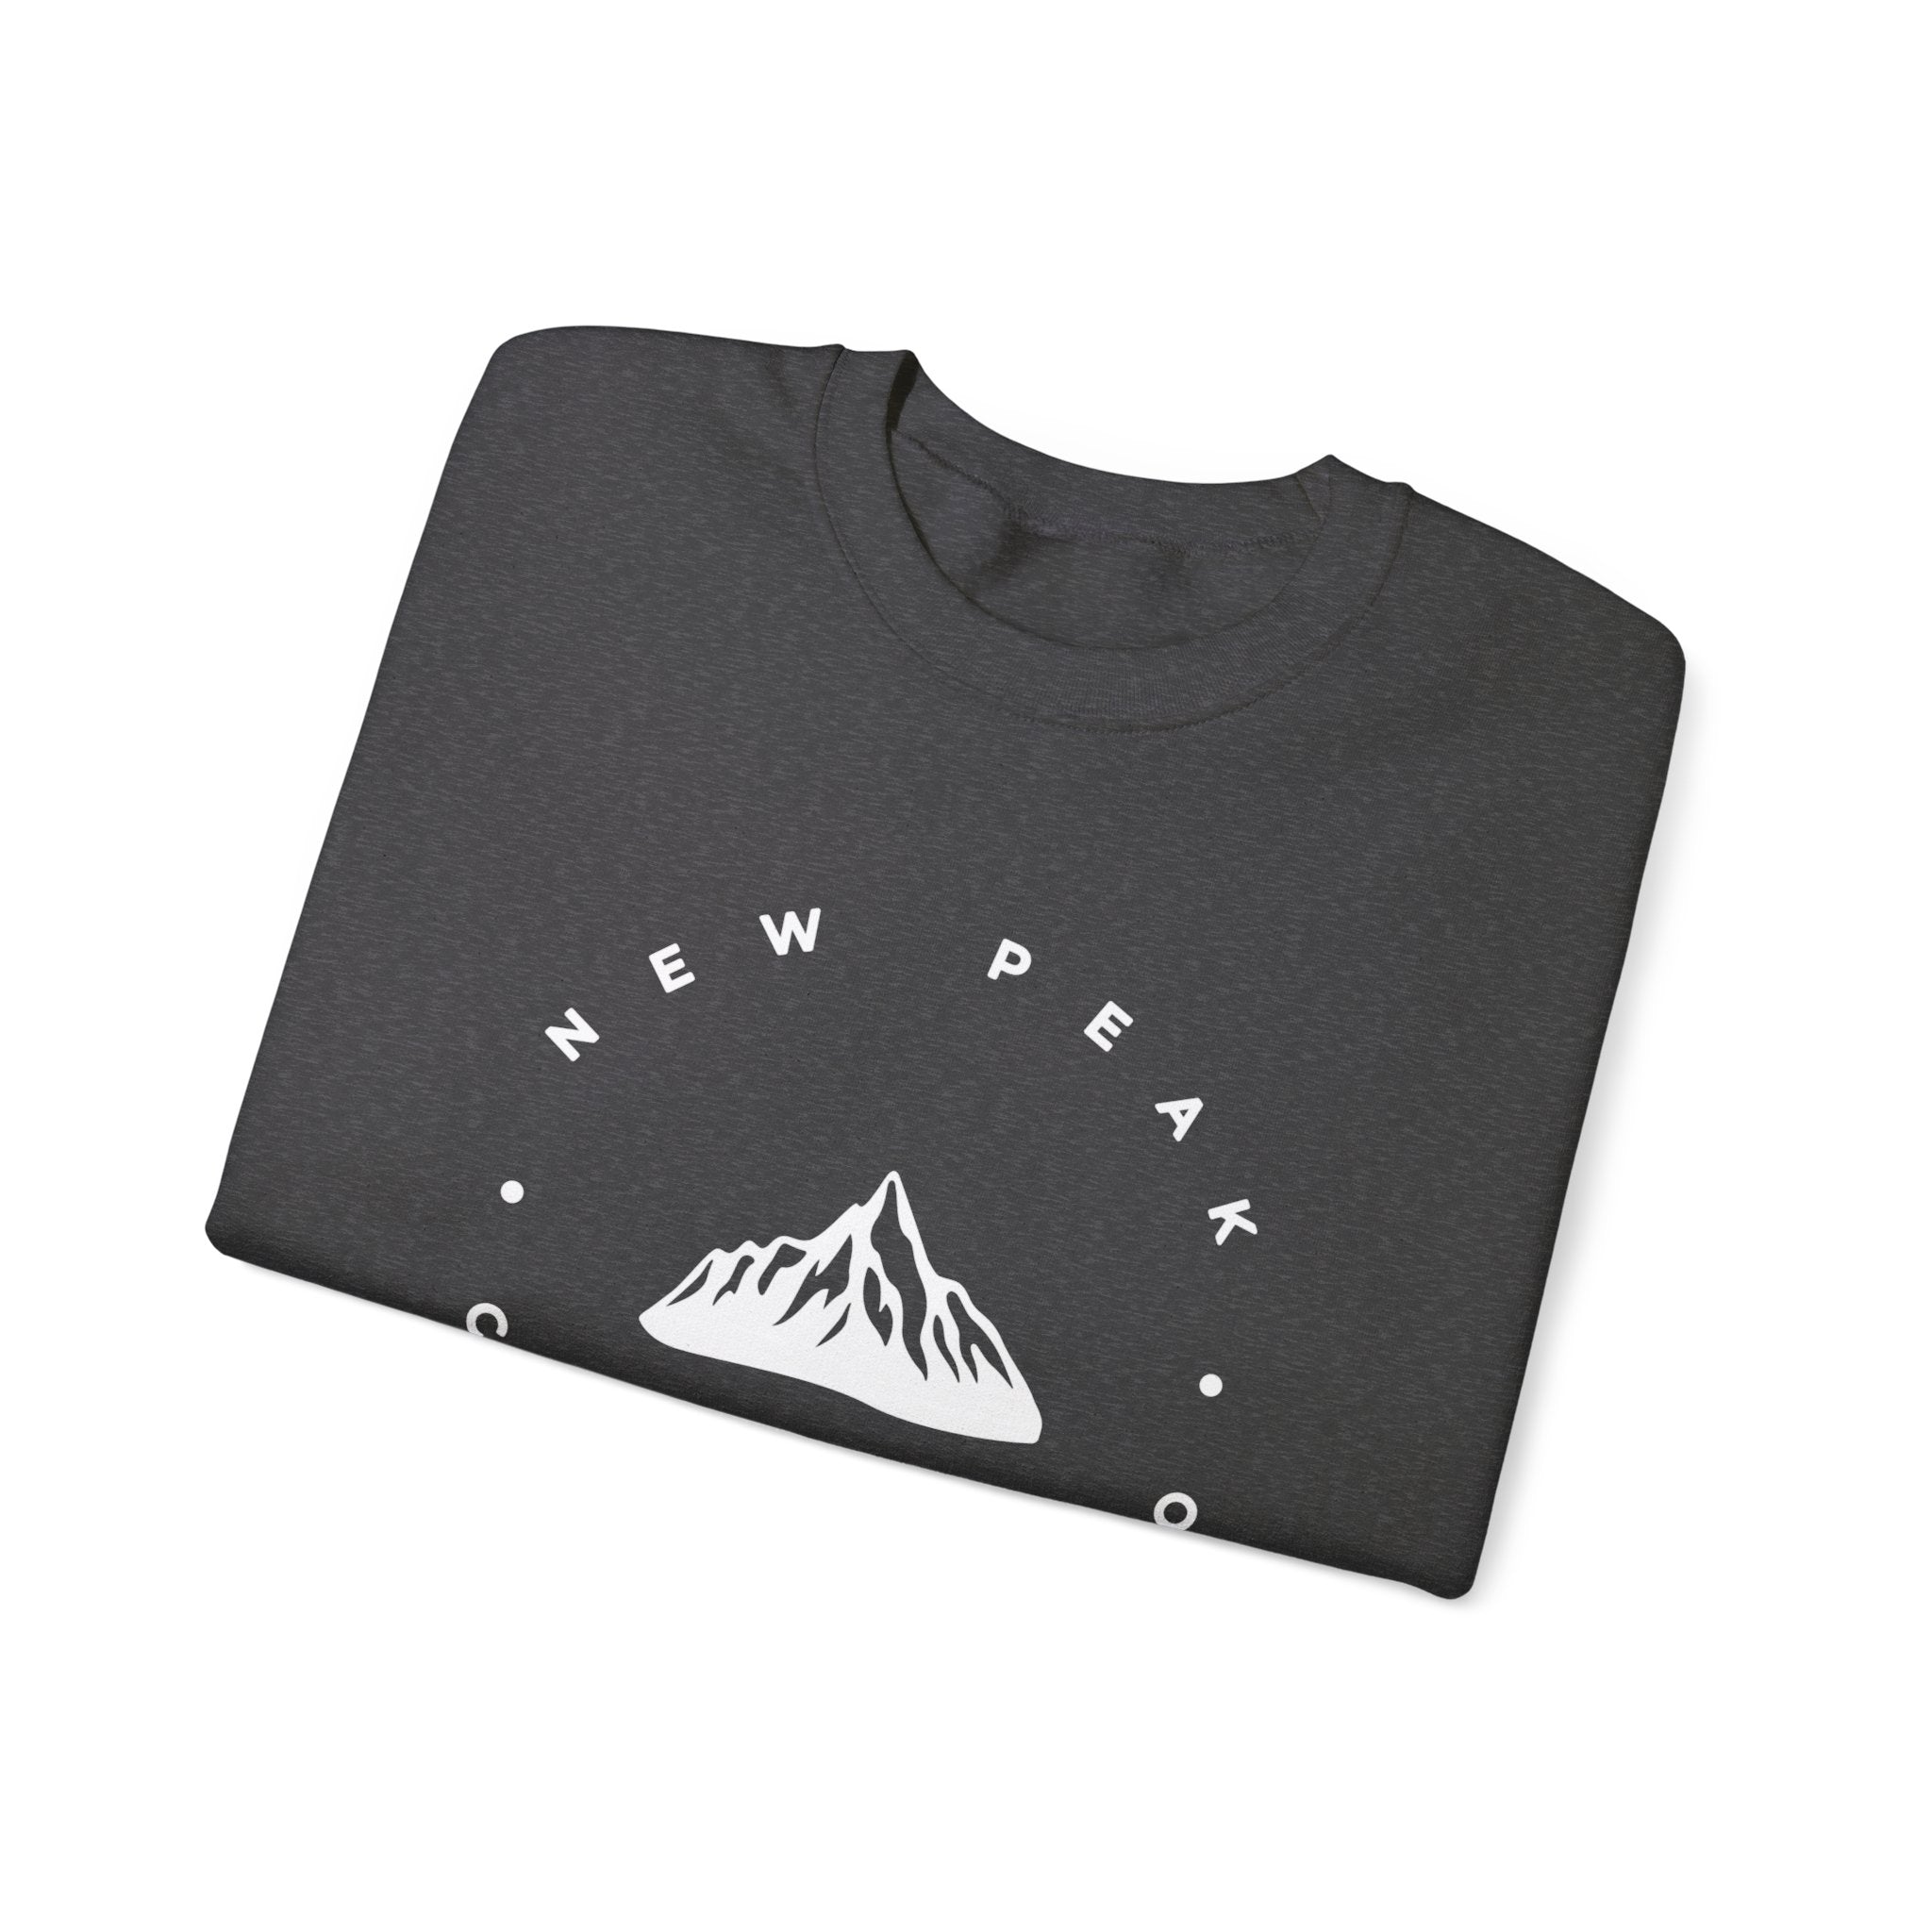 New Peak x Heavy Blend™ Crewneck Sweatshirt - The e1 Collection